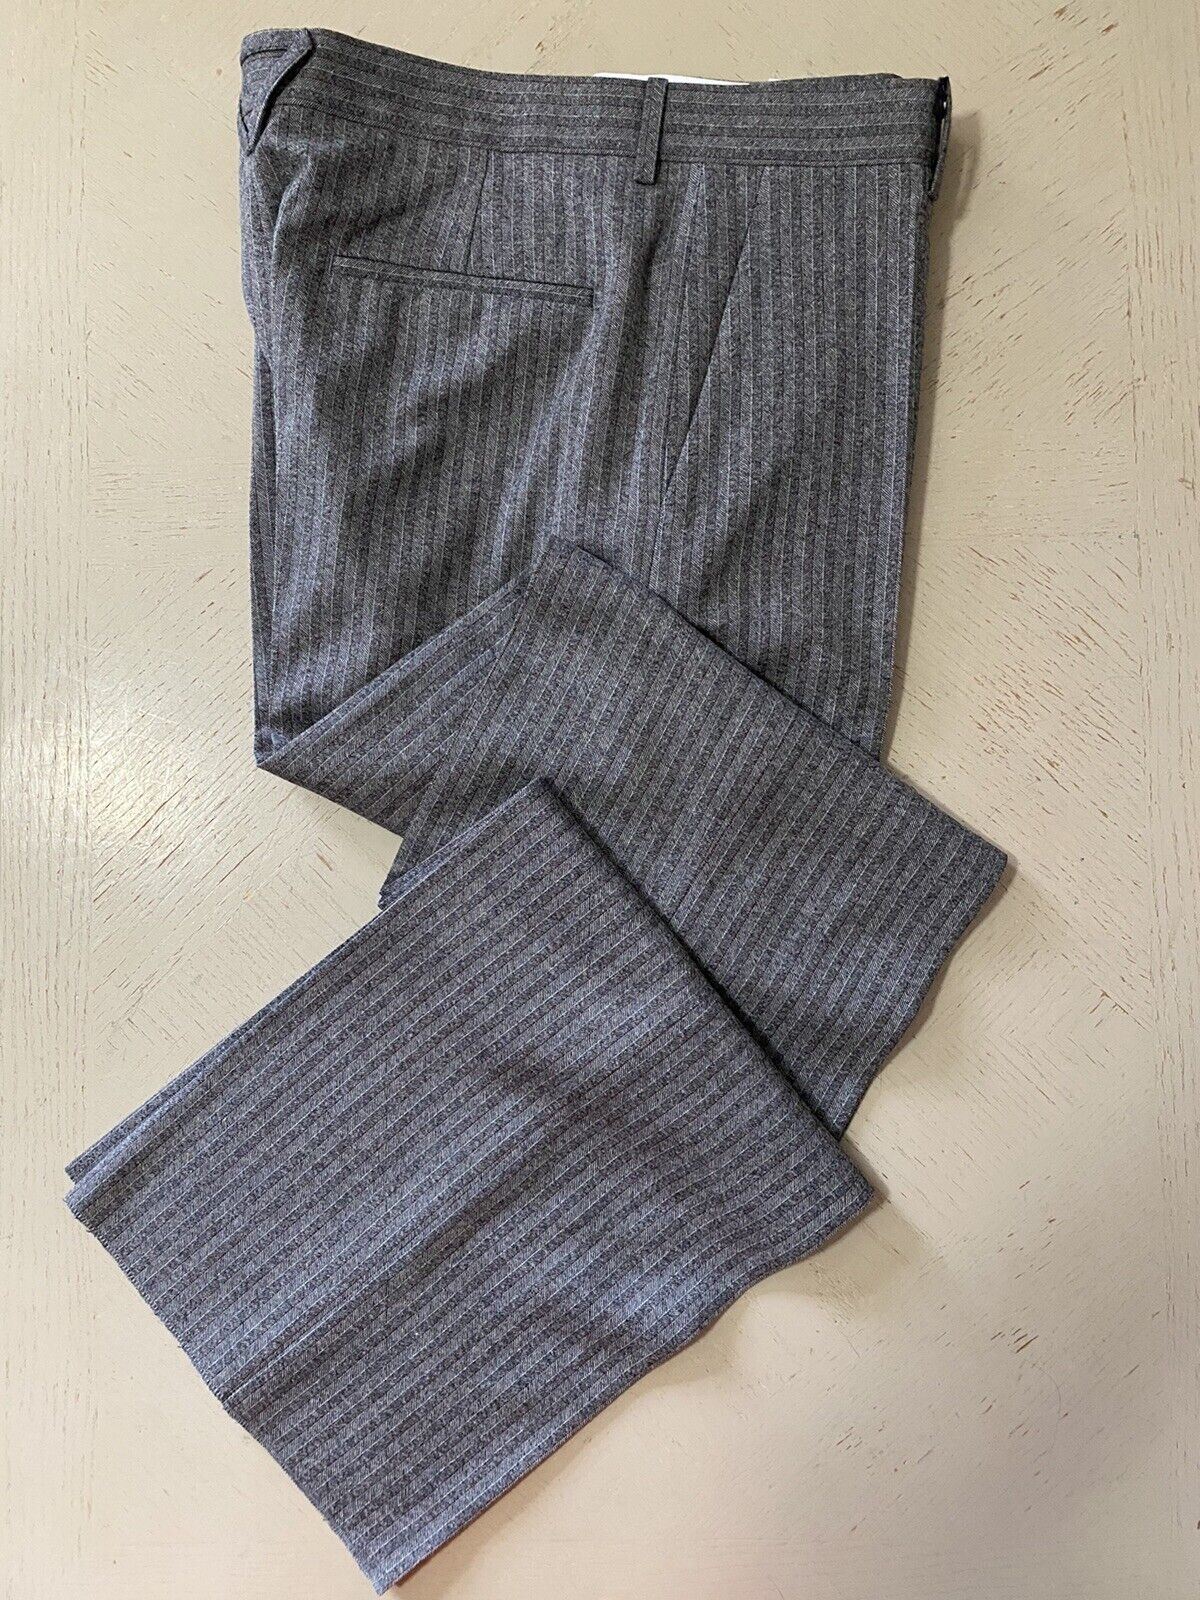 New $3500 Bottega Veneta Men Soft Wool Suit Gray 42R US/52R Eu Italy